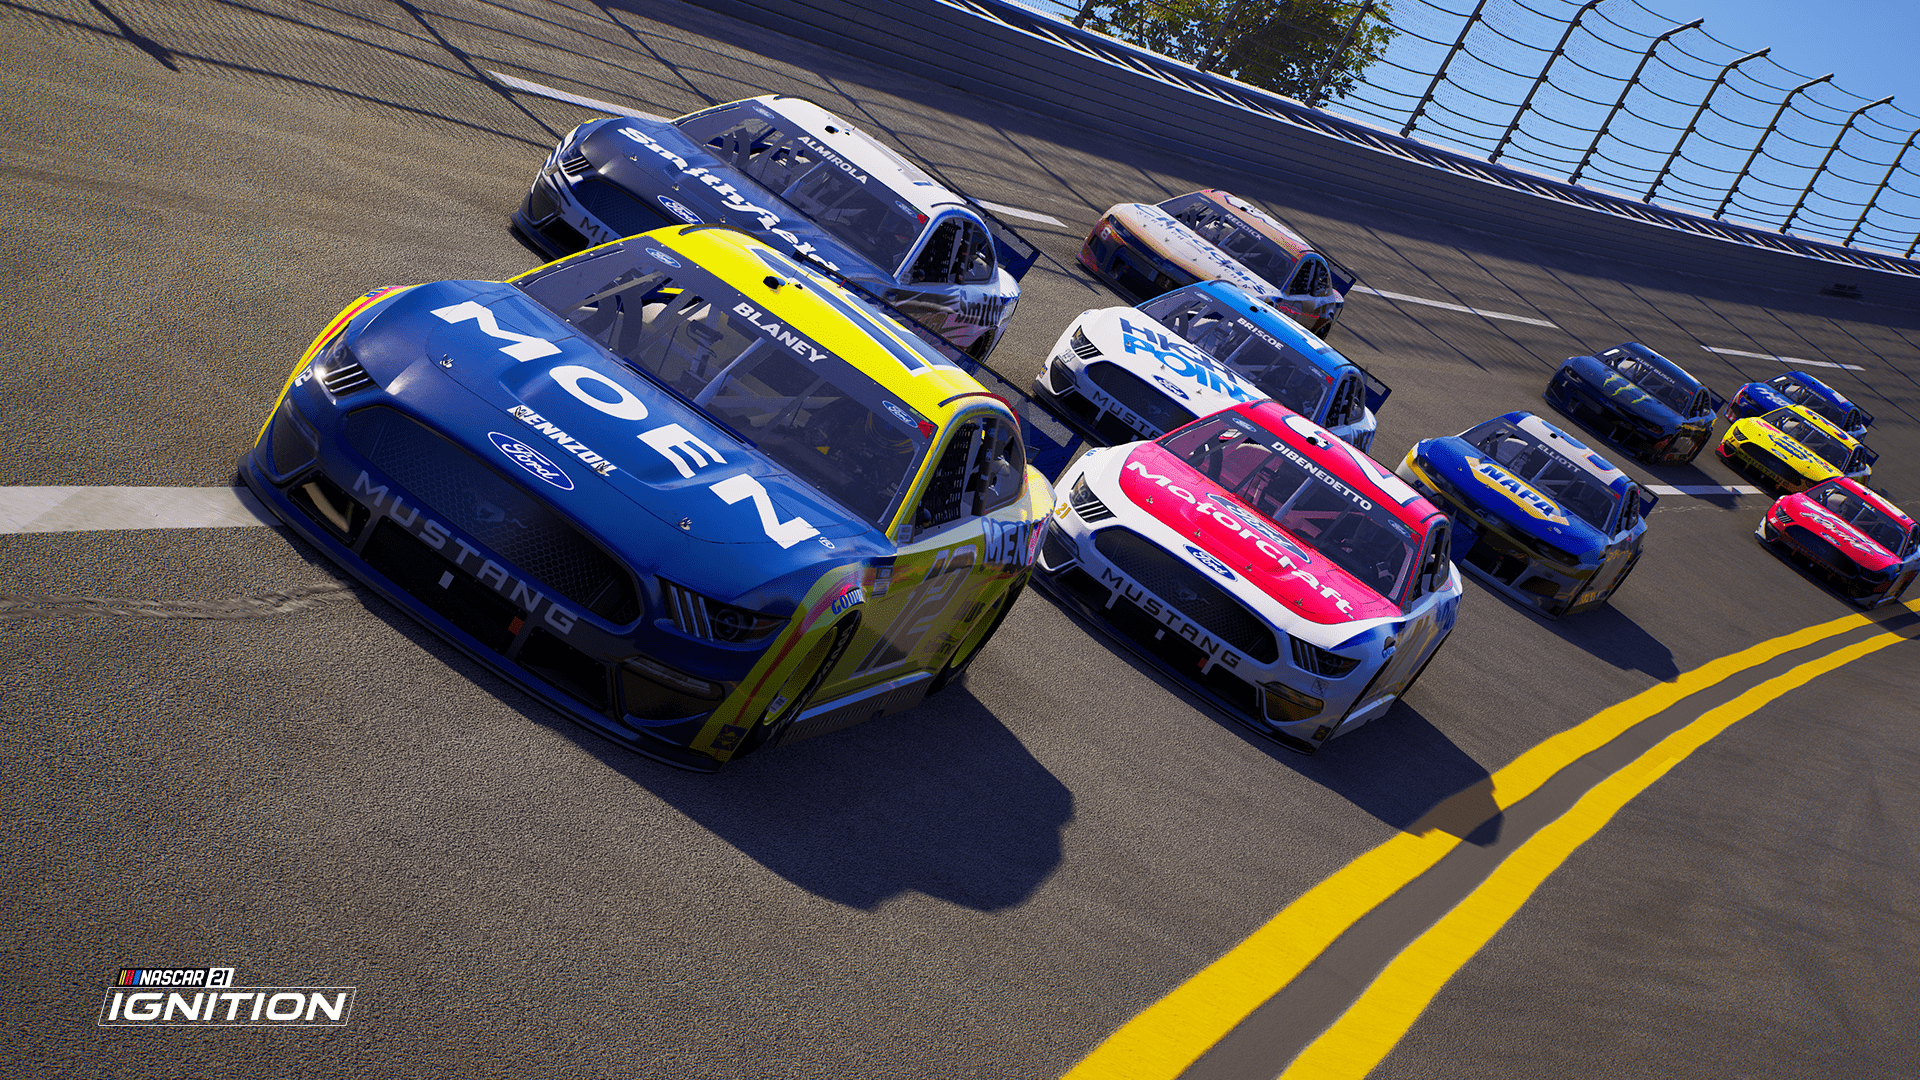 NASCAR 21: Ignition Game update